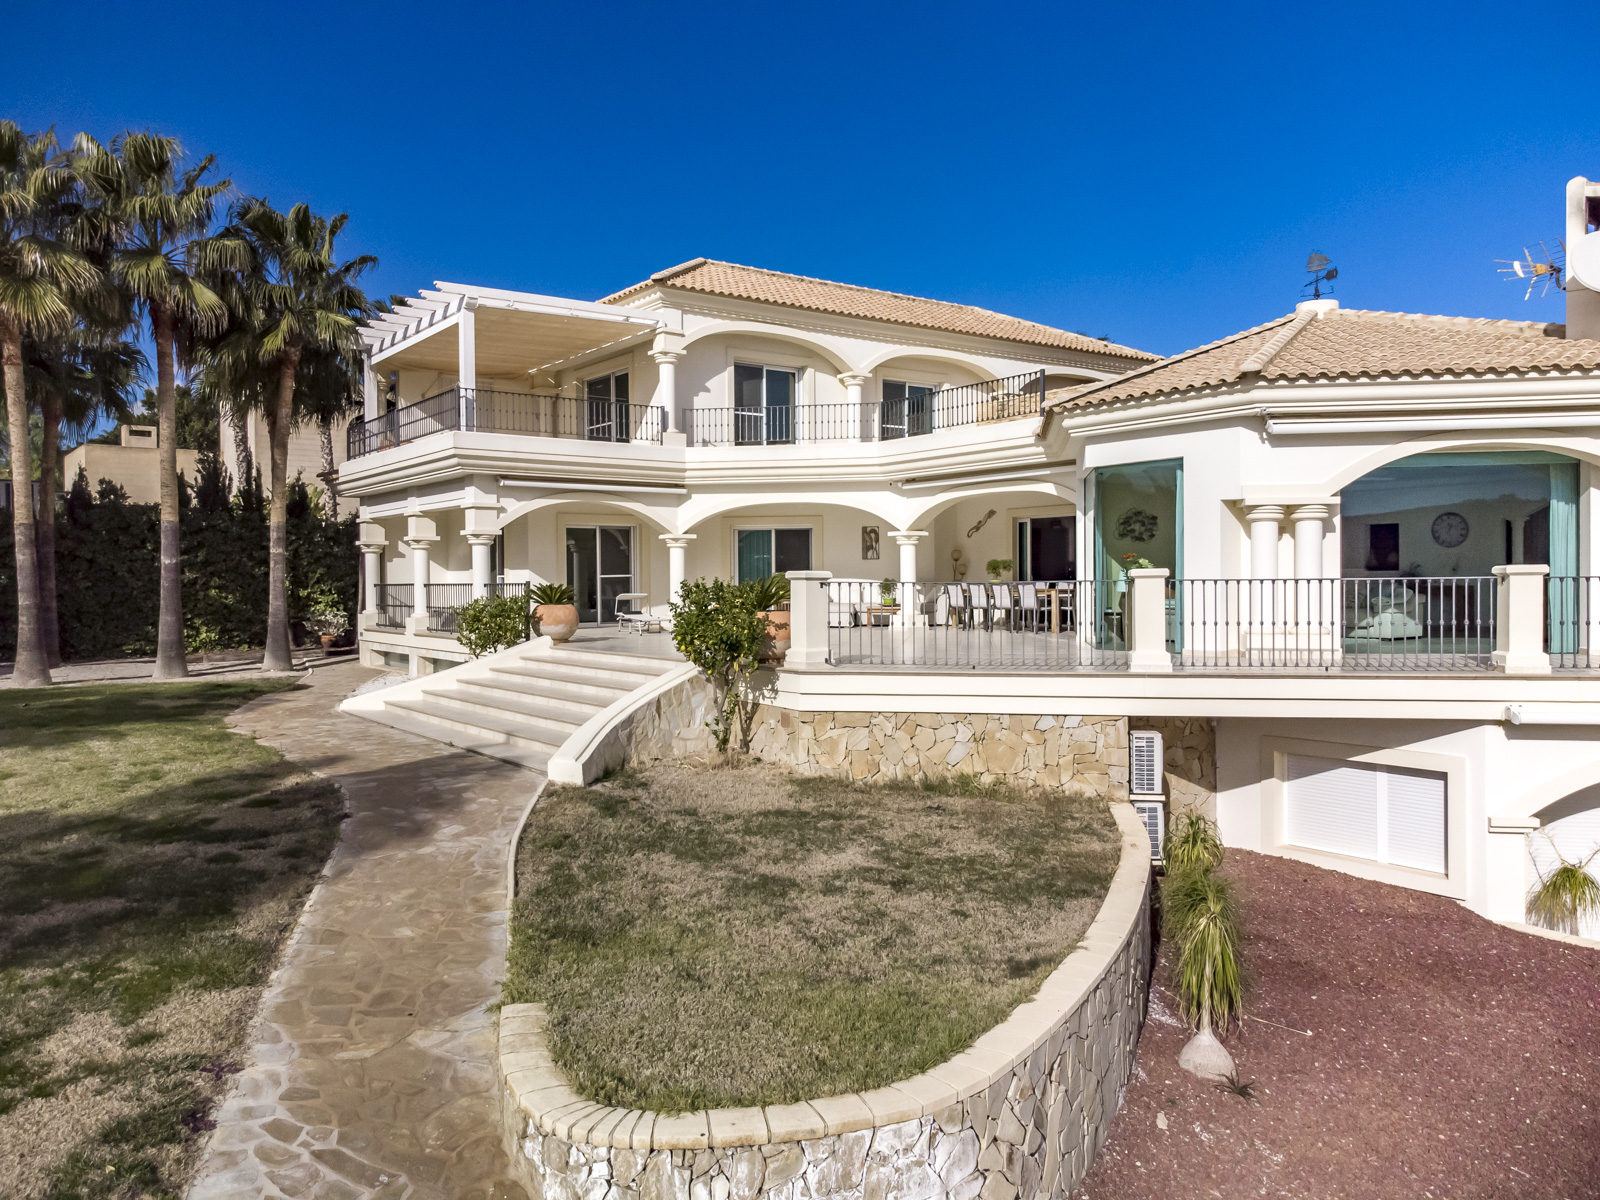 Unieke villa te koop in Busot, op 10 km van de stranden van El Campello, Alicante